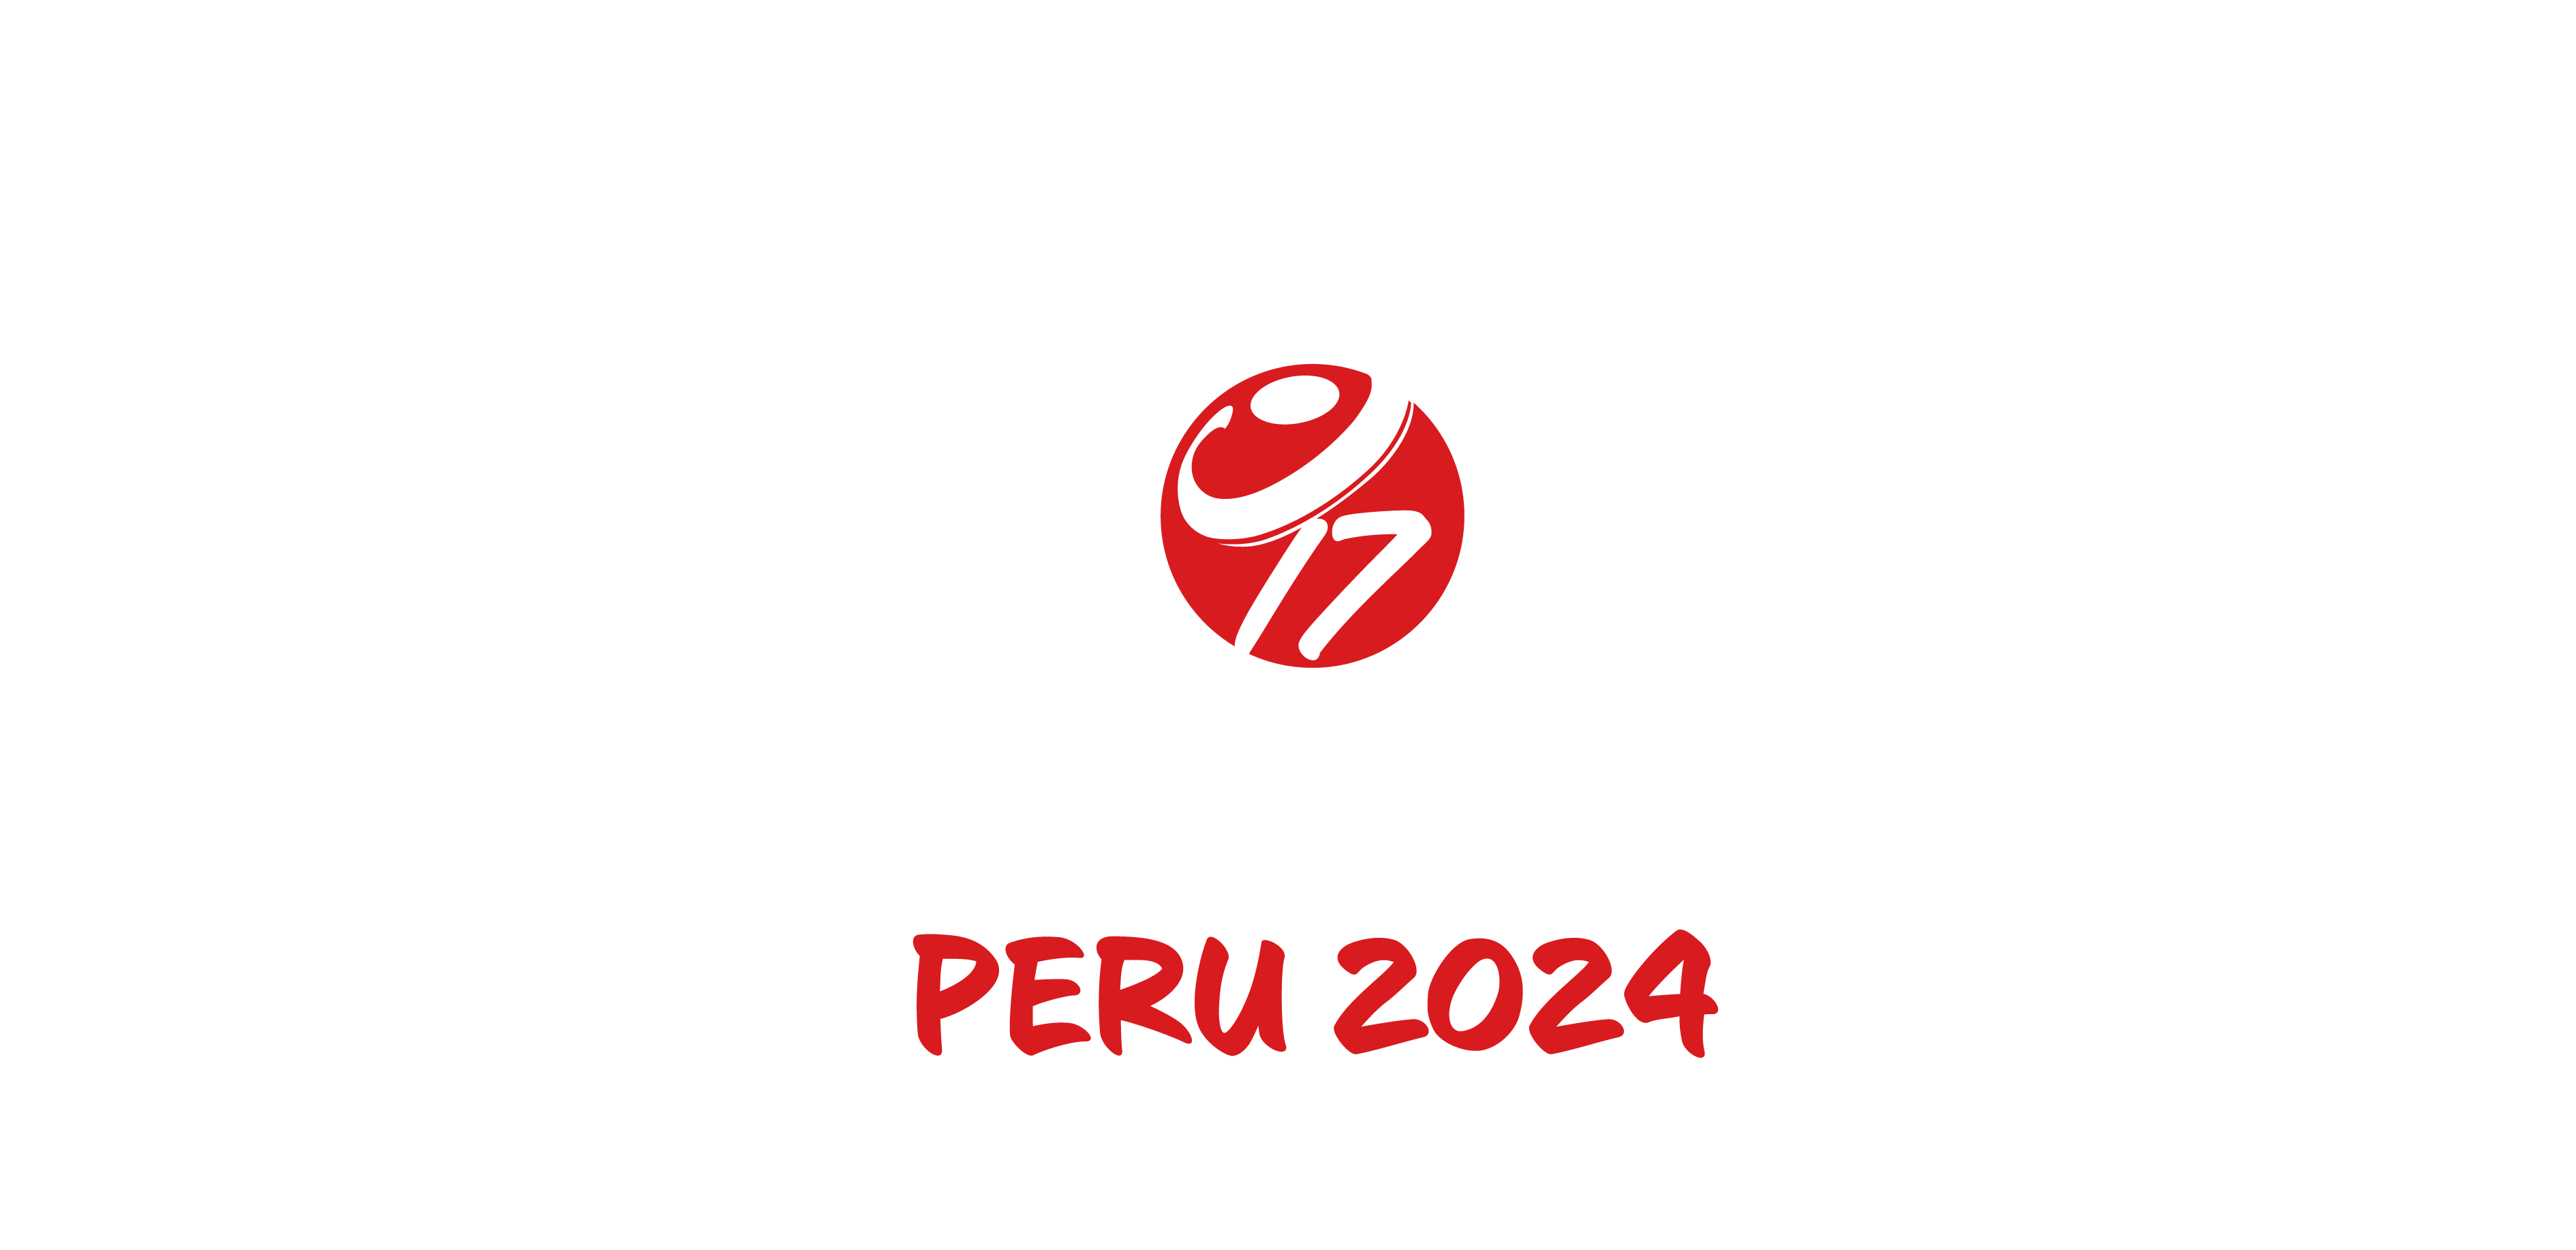 FIVB Volleyball Girls' U17 World Championship